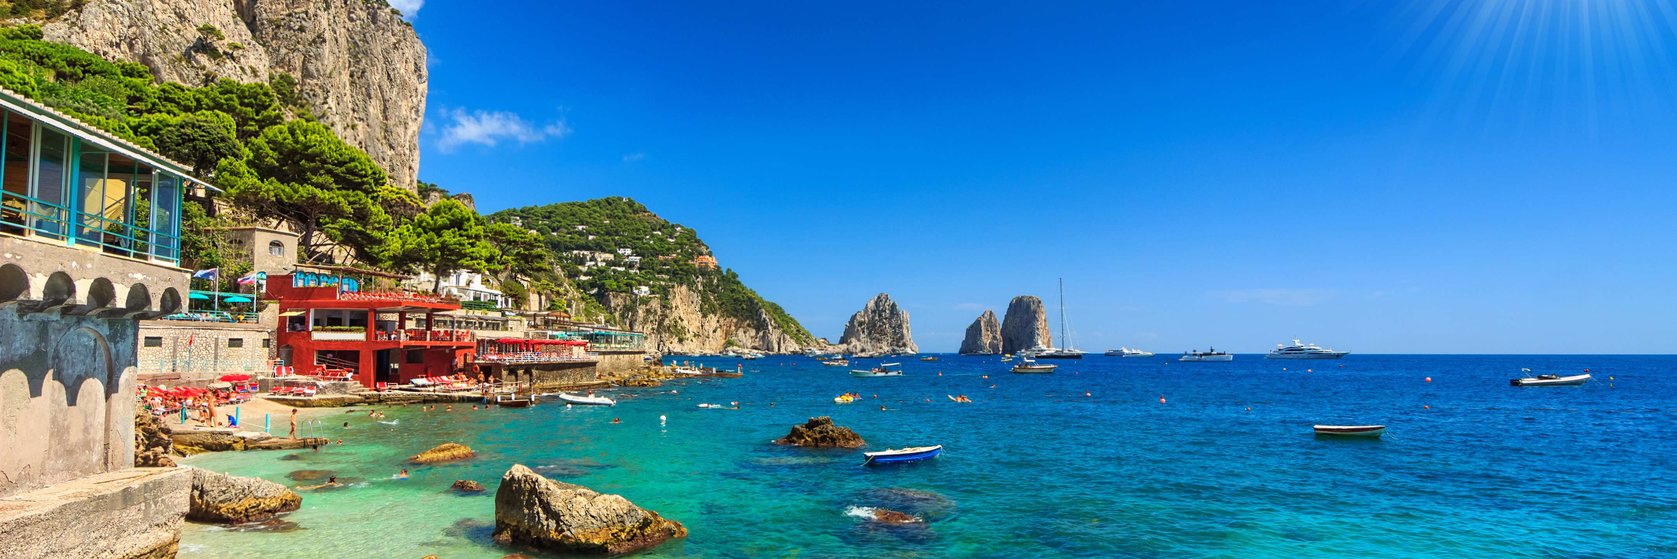 O lokalitě na Capri